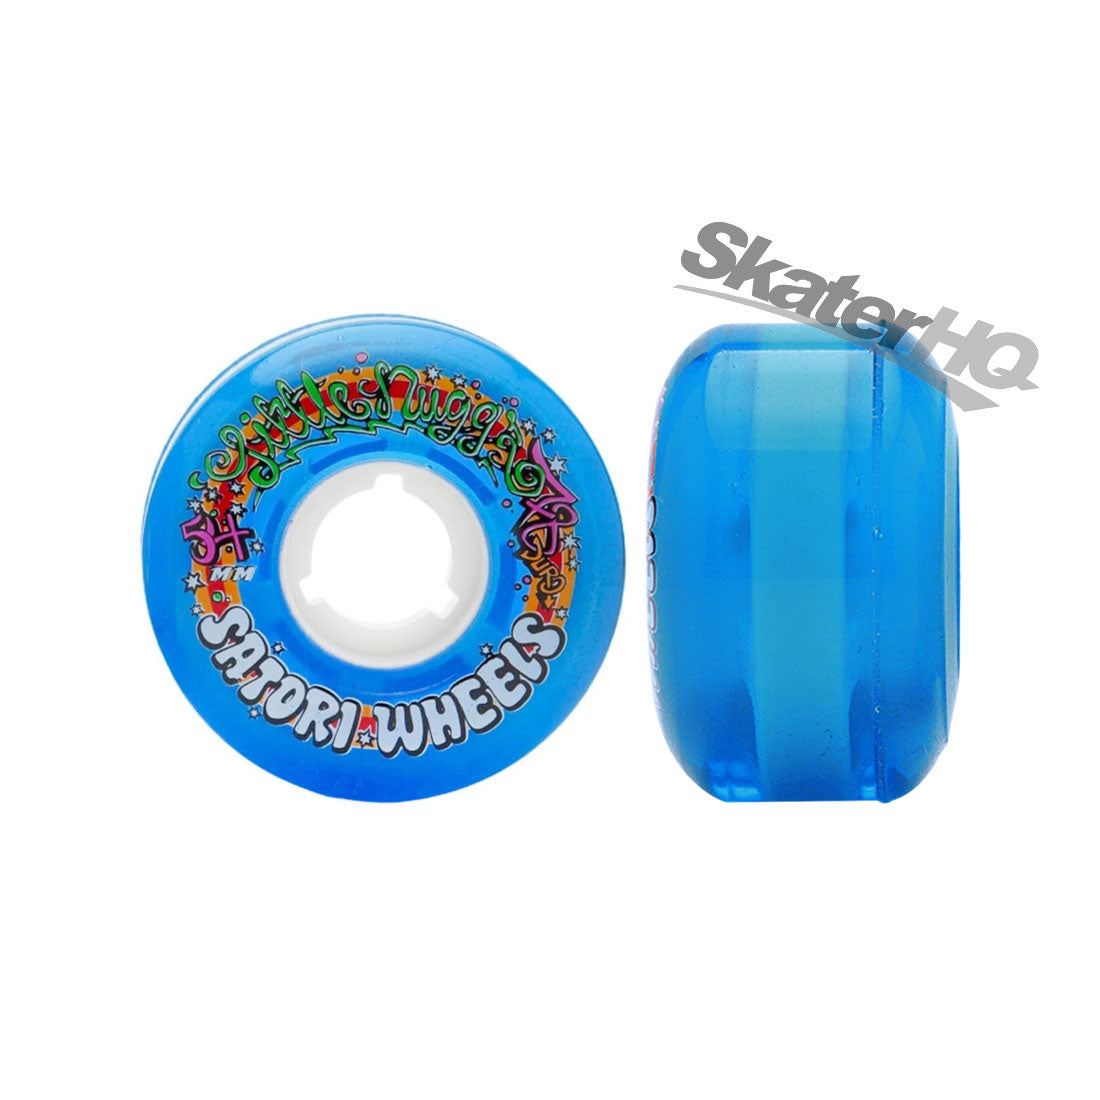 Satori Lil Nugz 54mm 78a 4pk - Clear Blue Skateboard Wheels